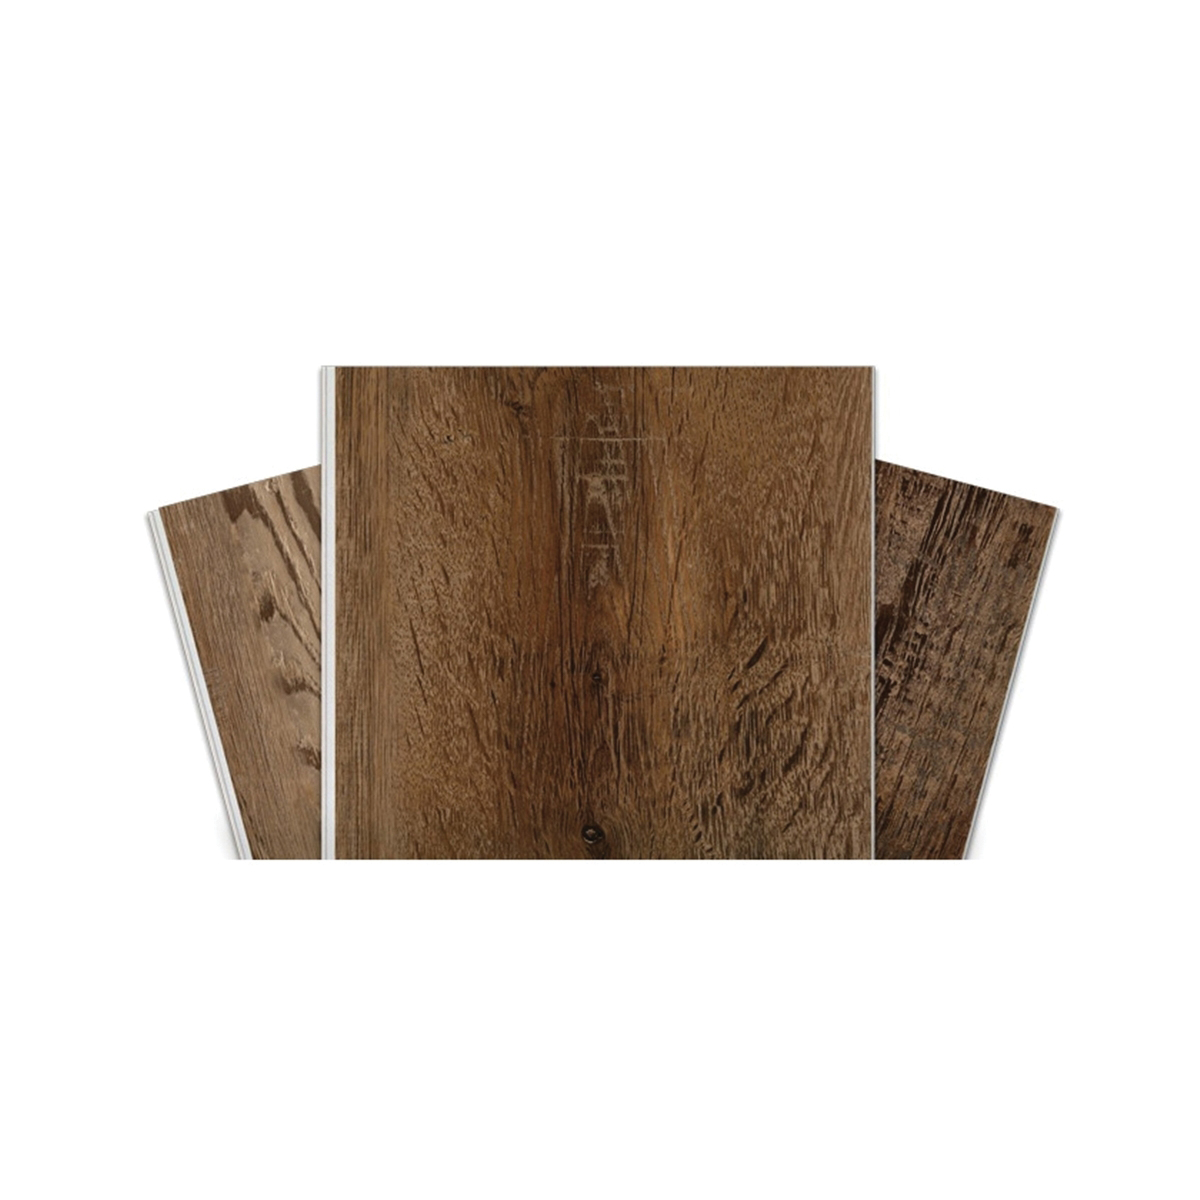 Pro Classic Series 7904108200 Plank Flooring, 48 in L, 7-1/8 in W, Micro Beveled Edge, Wood Grain Pattern, Vinyl